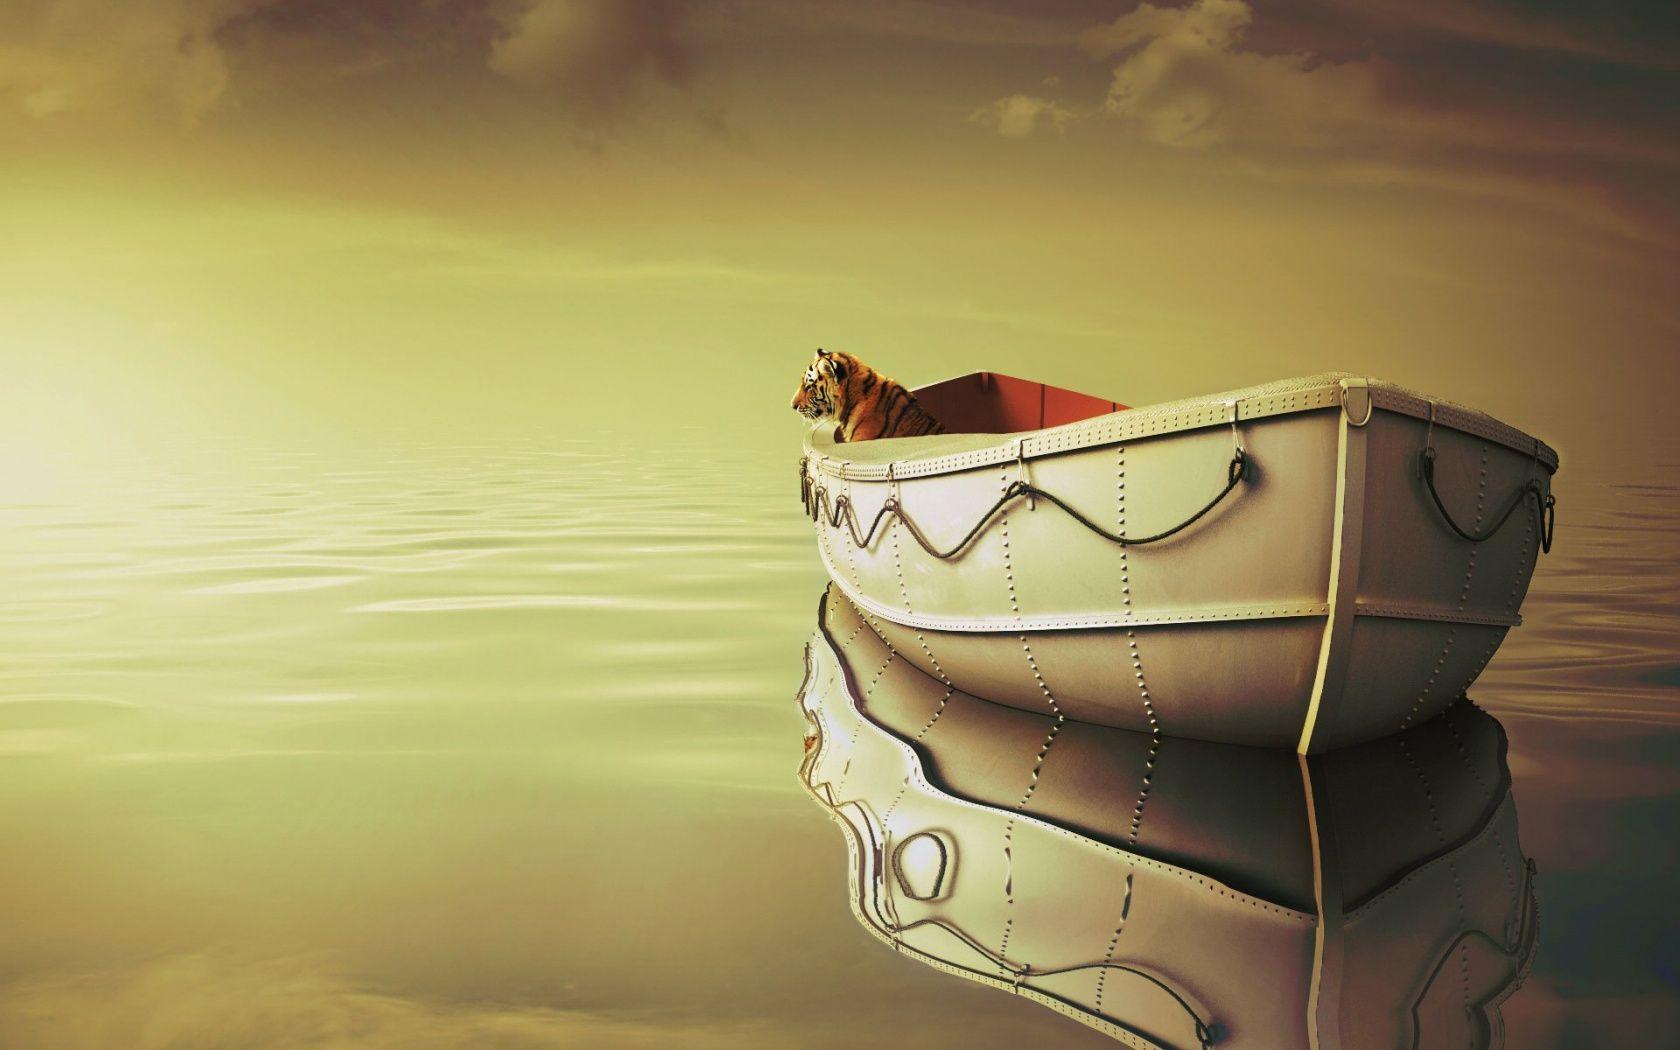 Life Of Pi Boat Tiger Wallpaper in jpg format for free download